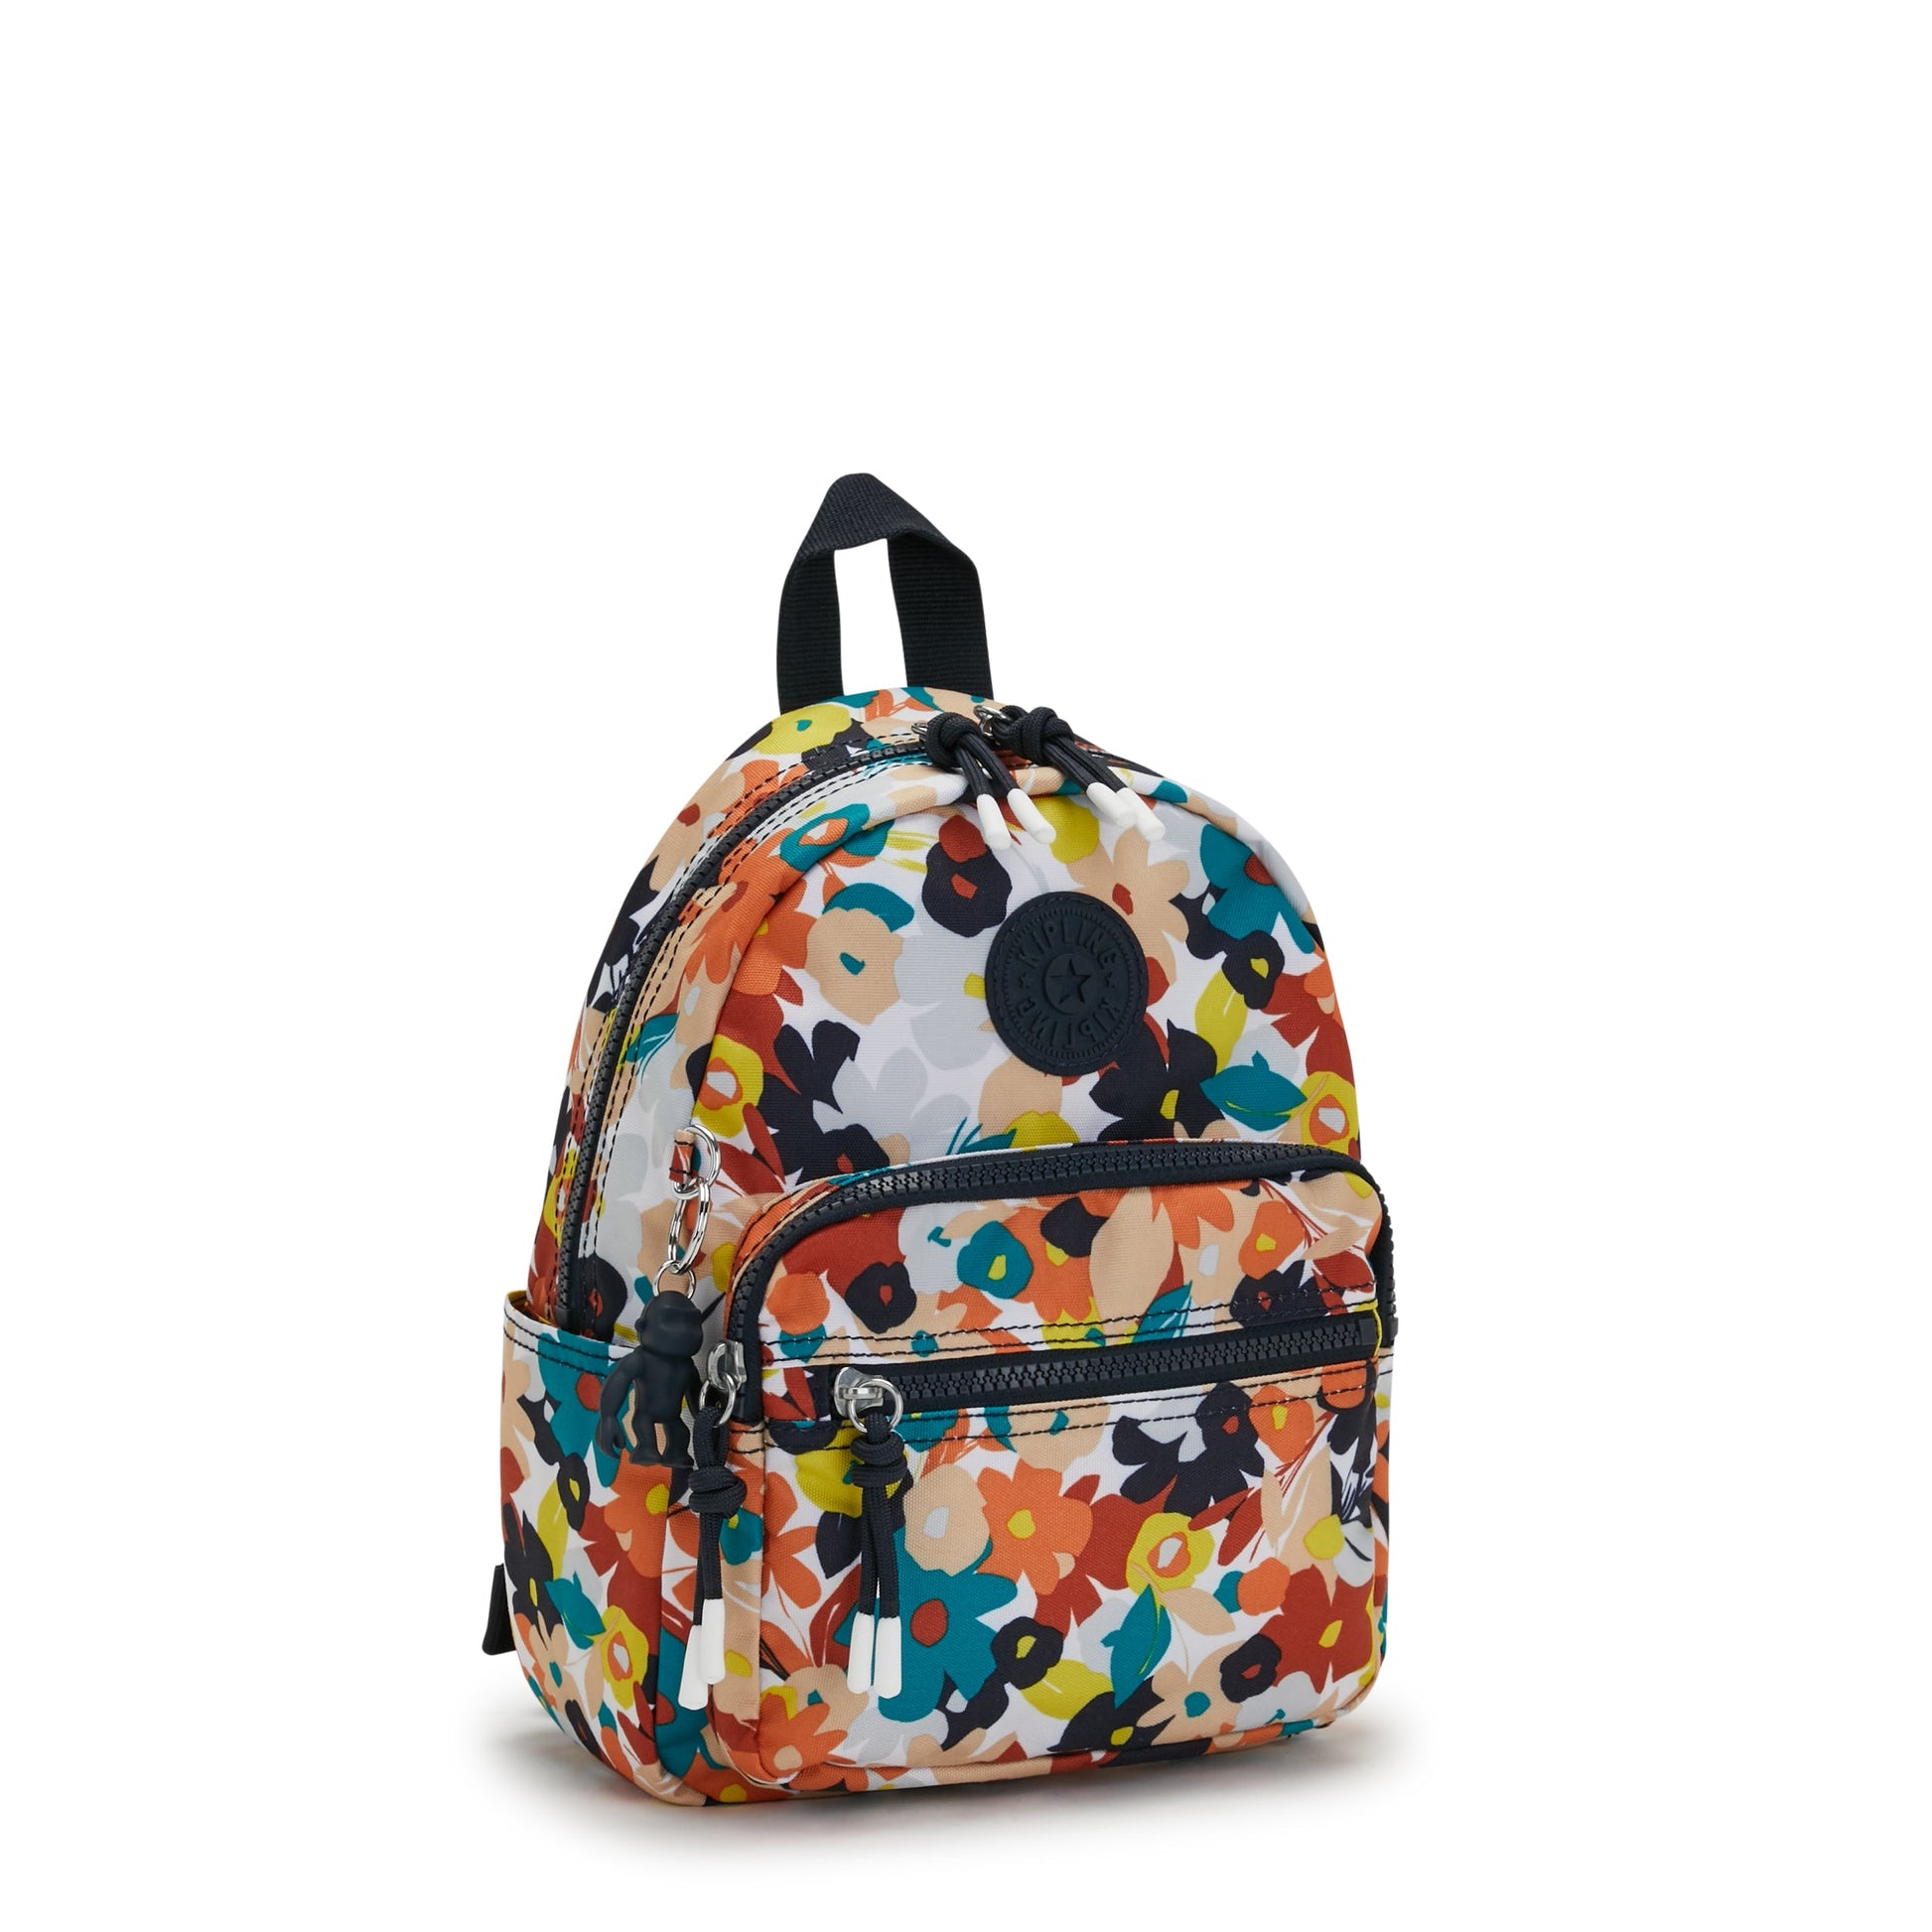 Kipling Farrah Small Printed Backpack - Bold Floral MJ